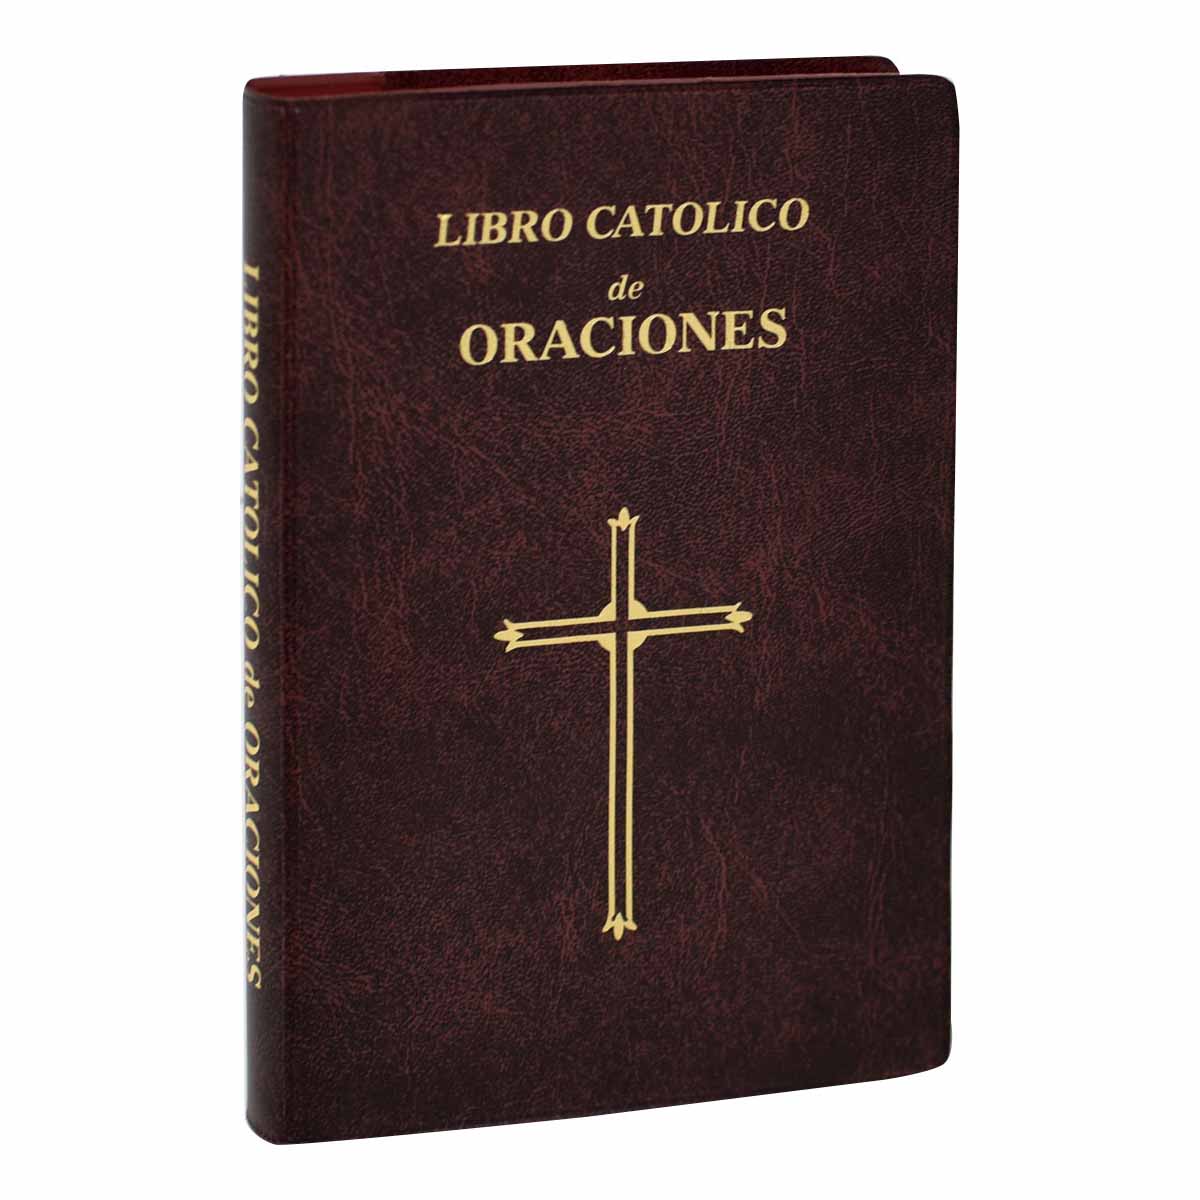 Libro Catolico de Oraciones by Rev. Maurus Fitzgerald, O.F.M.